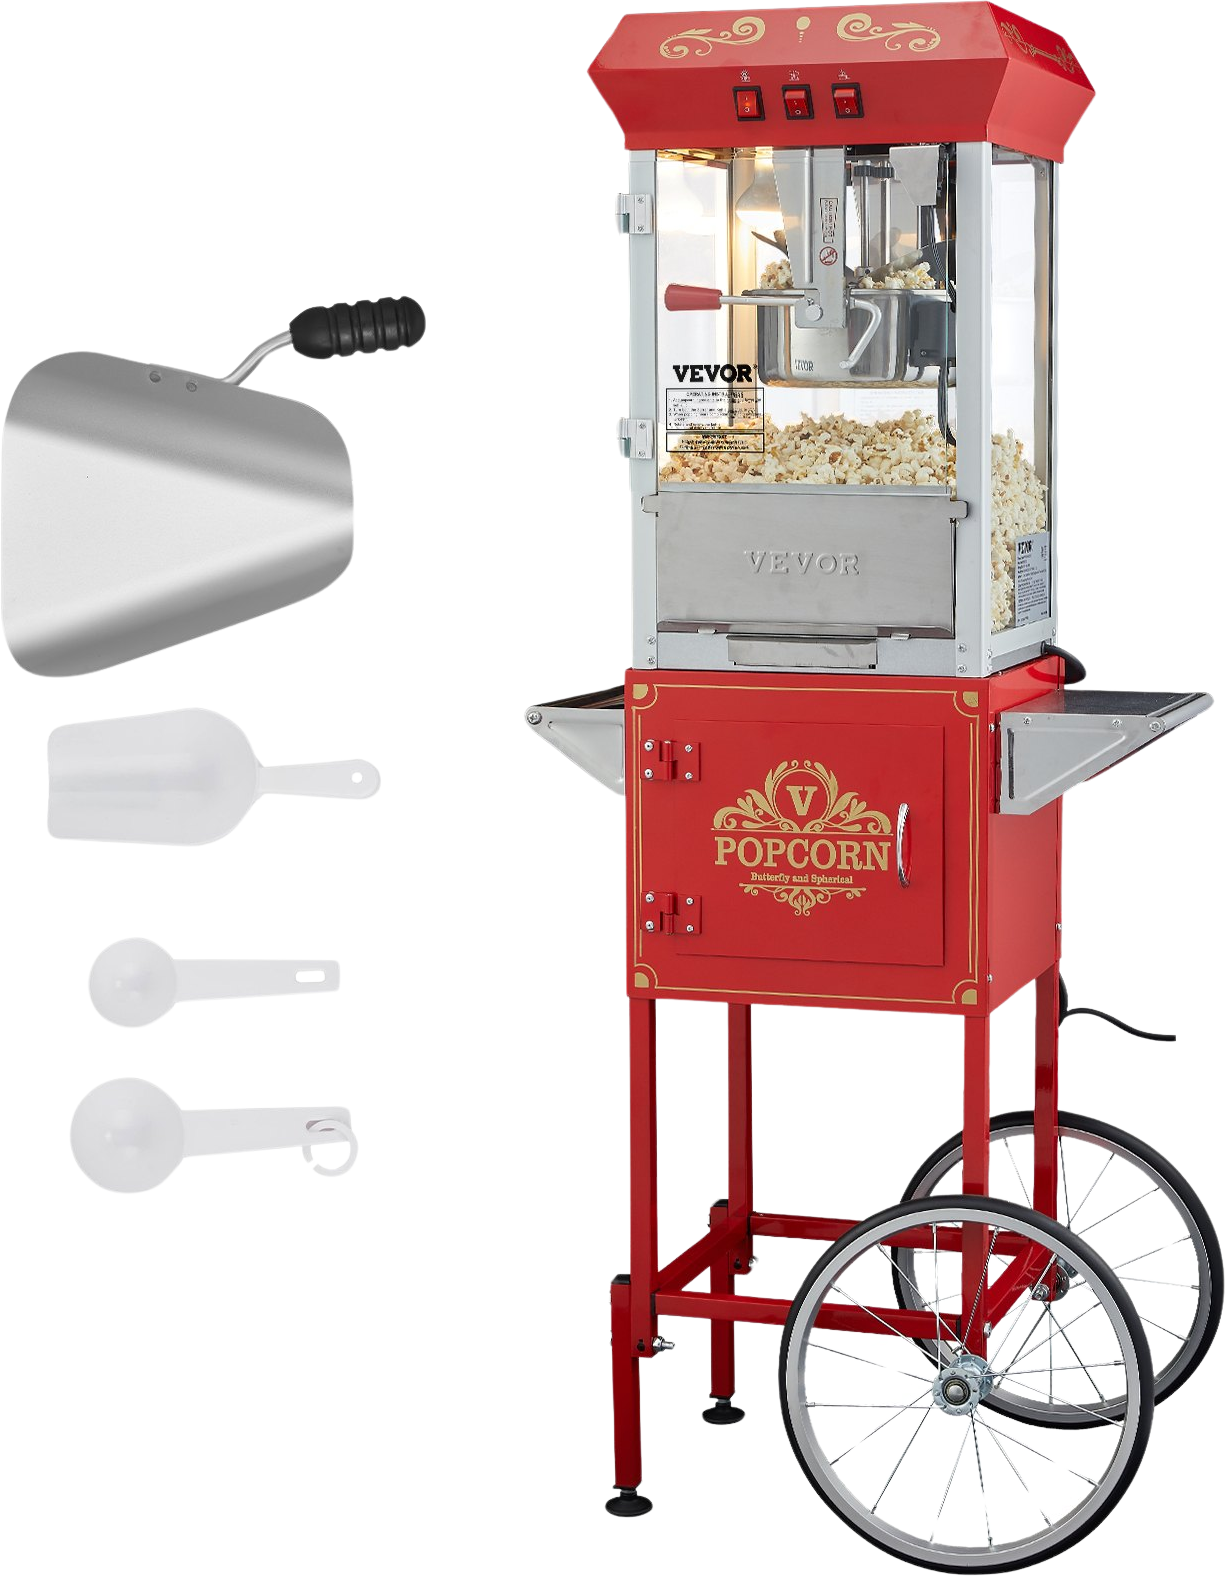 Vevor Popcorn Popper Machine 8 oz. Kettle 850W Popcorn Maker on Wheels New